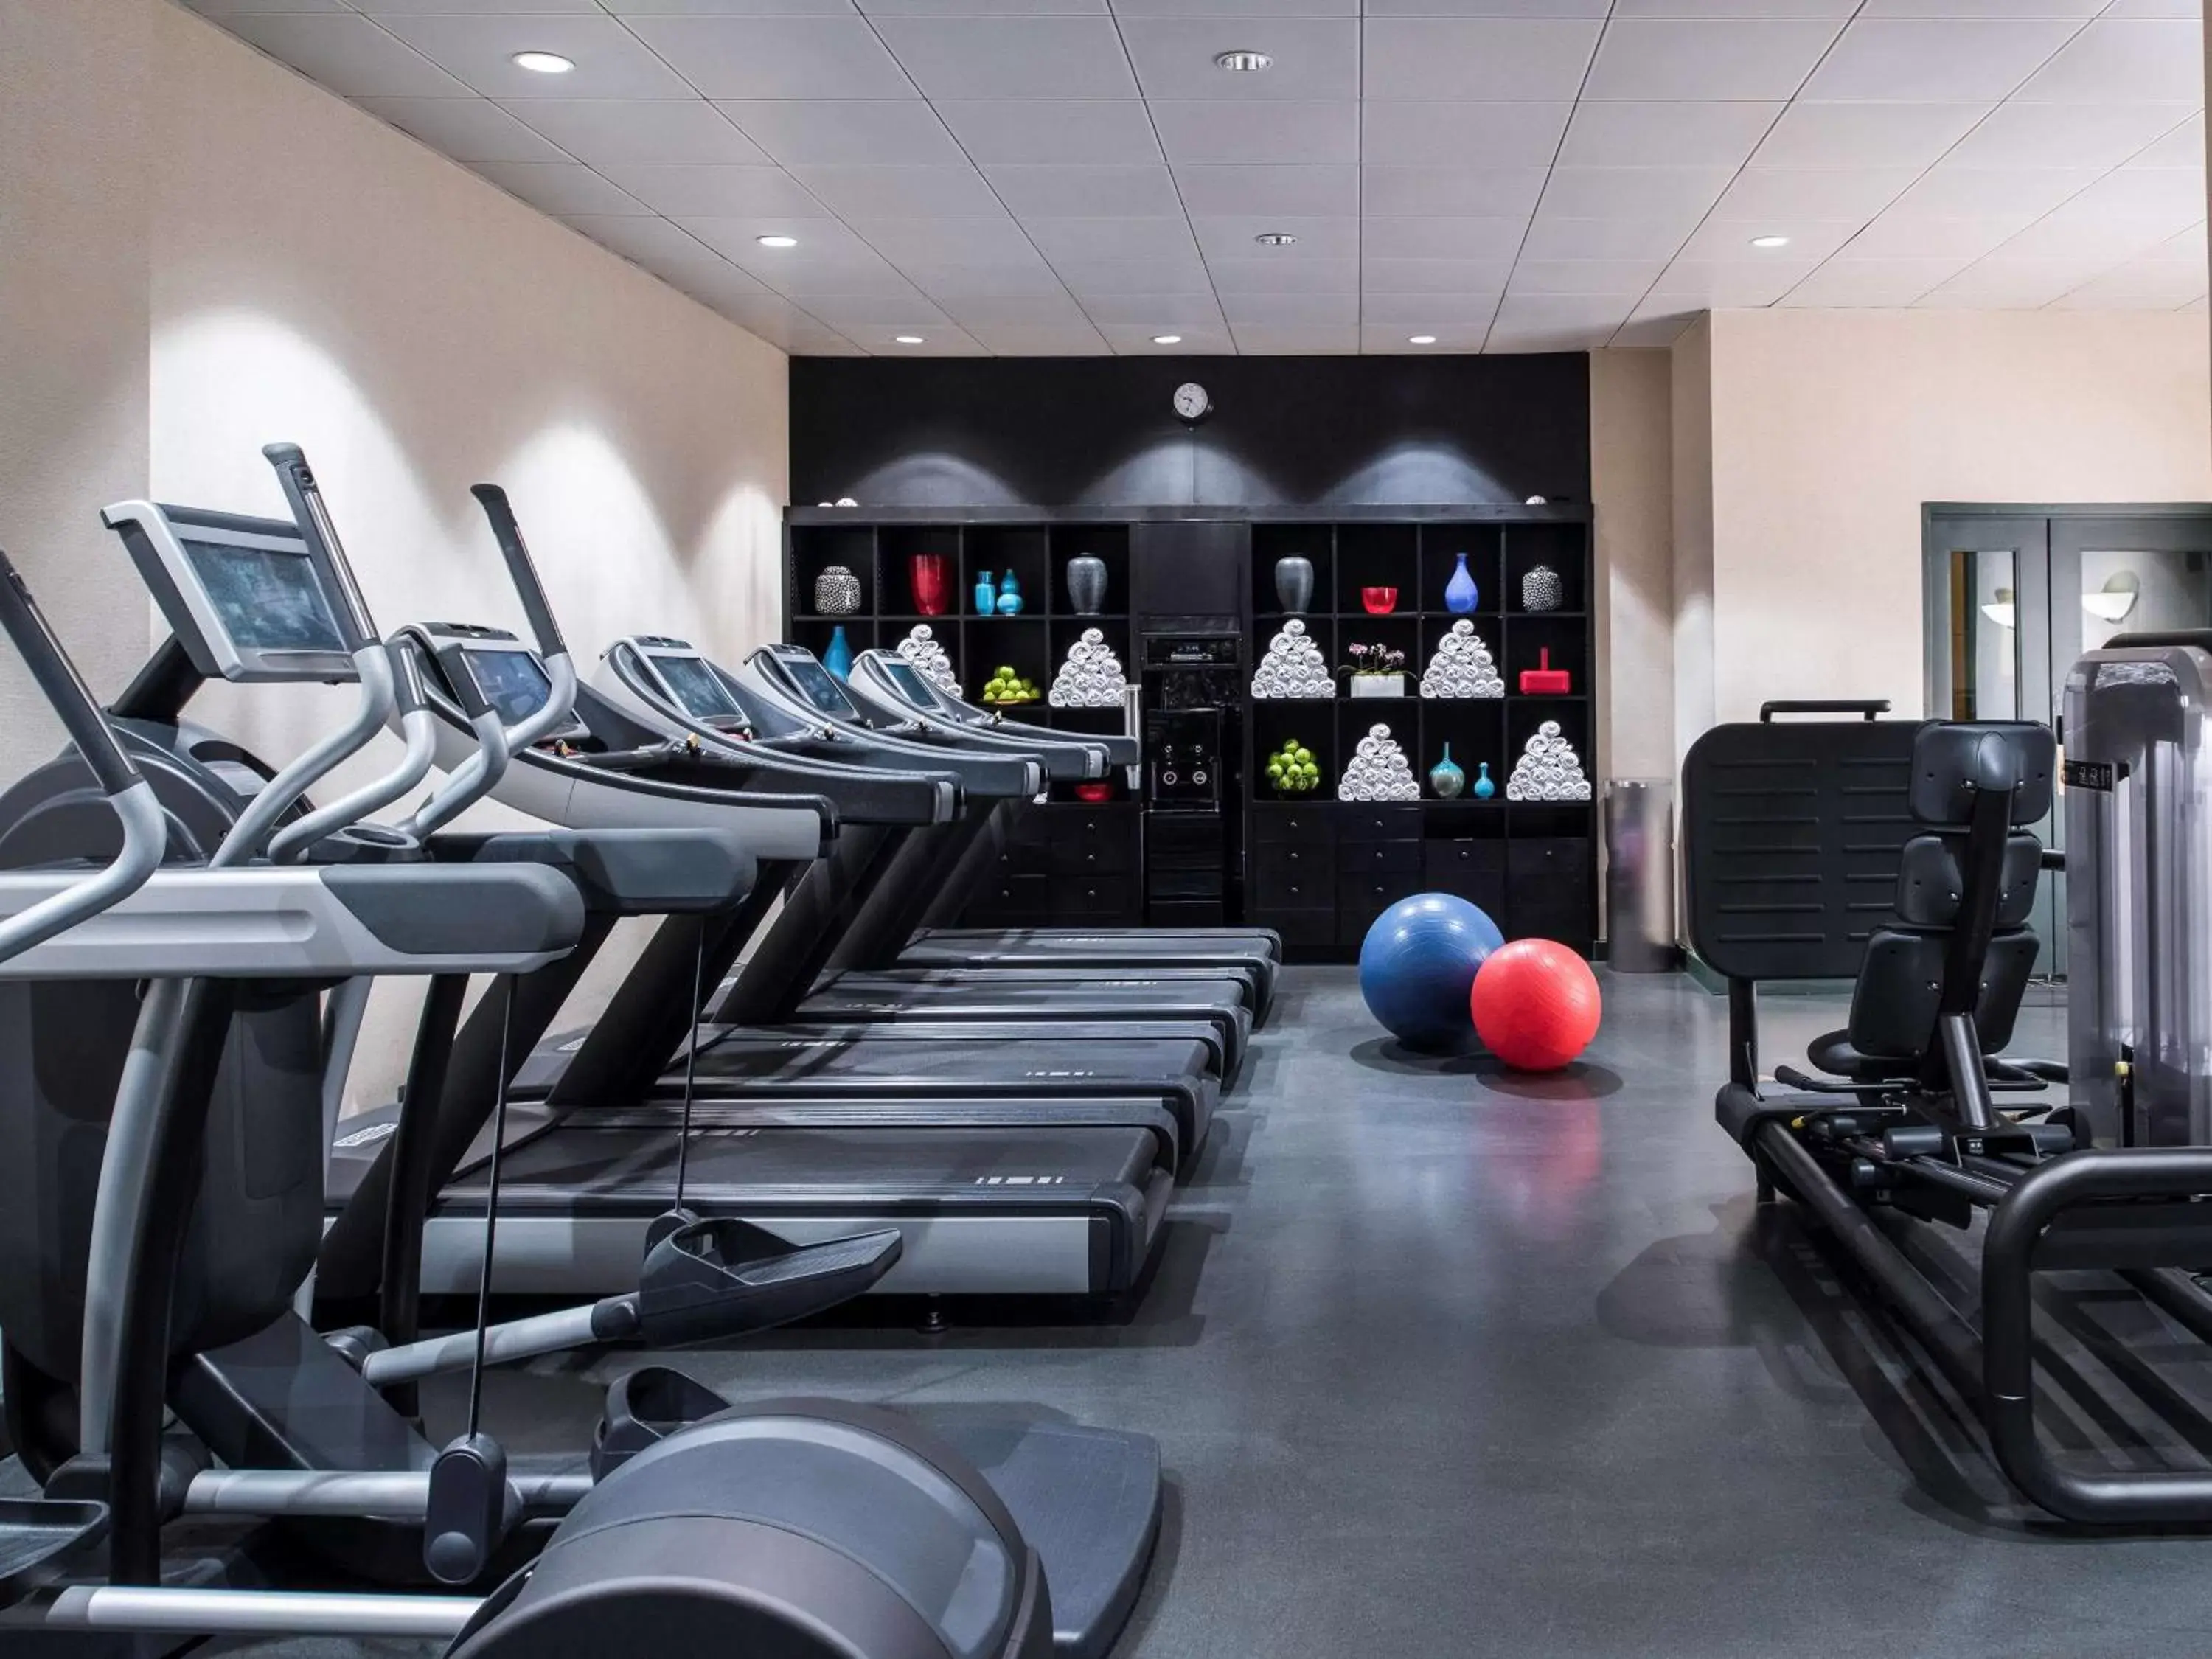 Fitness centre/facilities, Fitness Center/Facilities in Sofitel New York